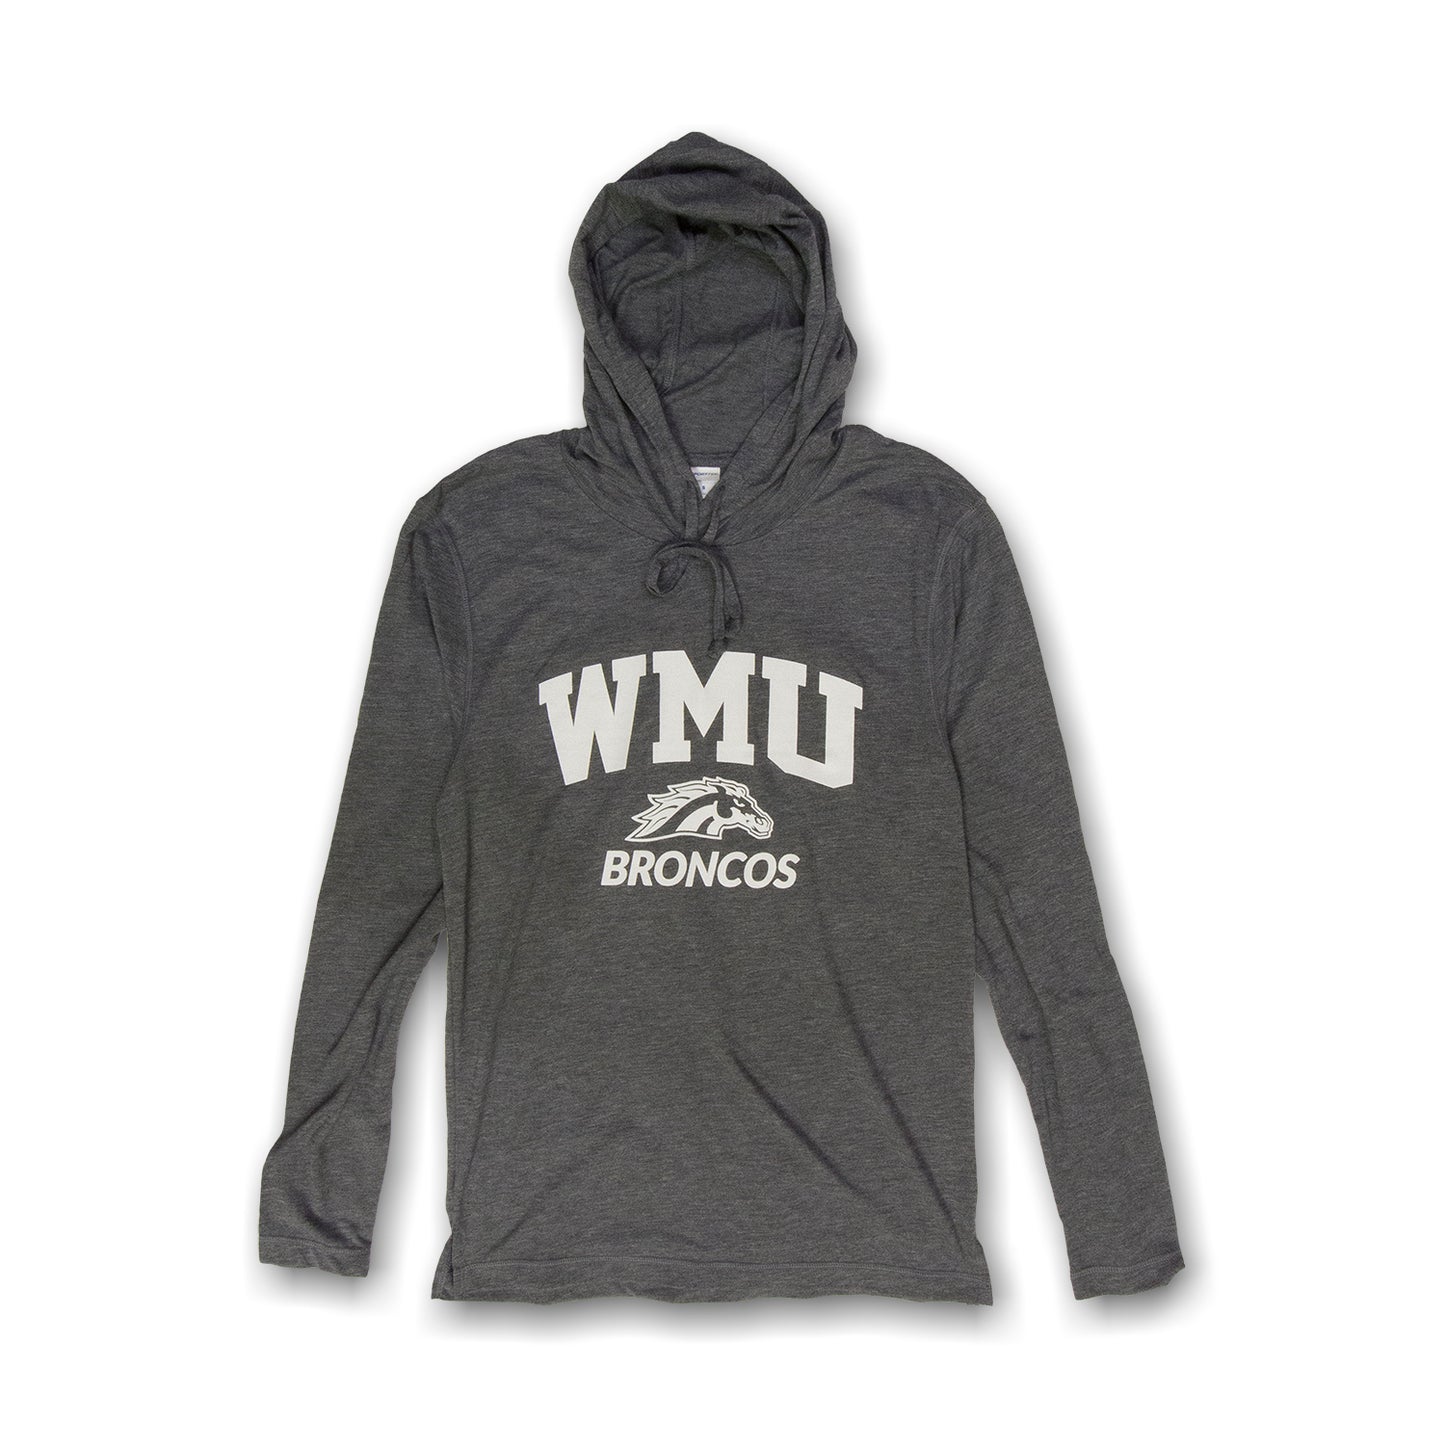 WMU Broncos Athletic Hooded LS Tee